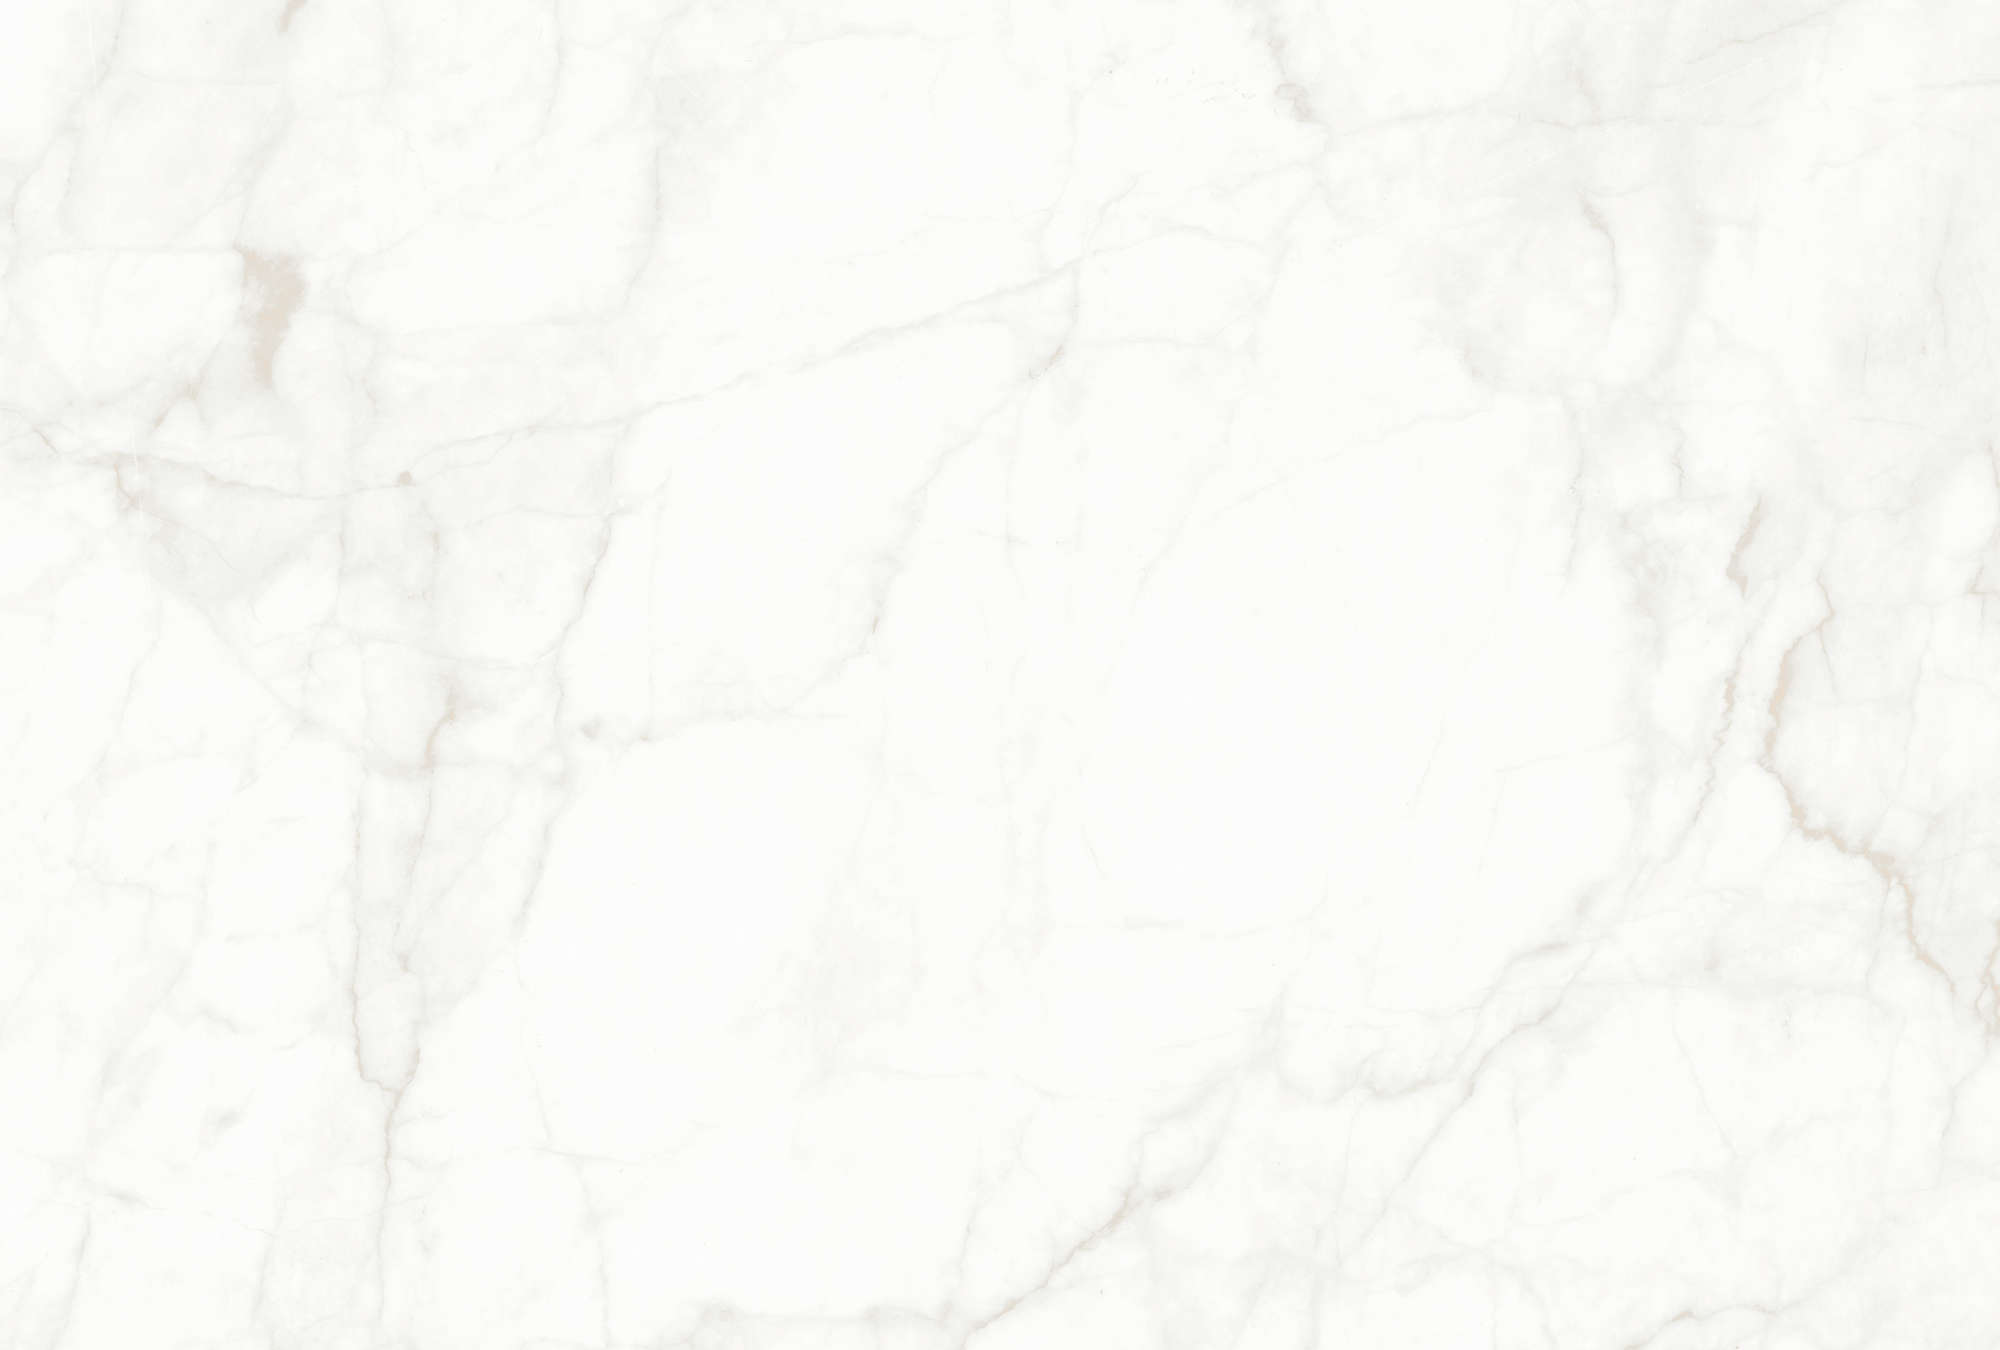             Papier peint panoramique marbre Greige by AENNA XOXO - blanc, gris
        